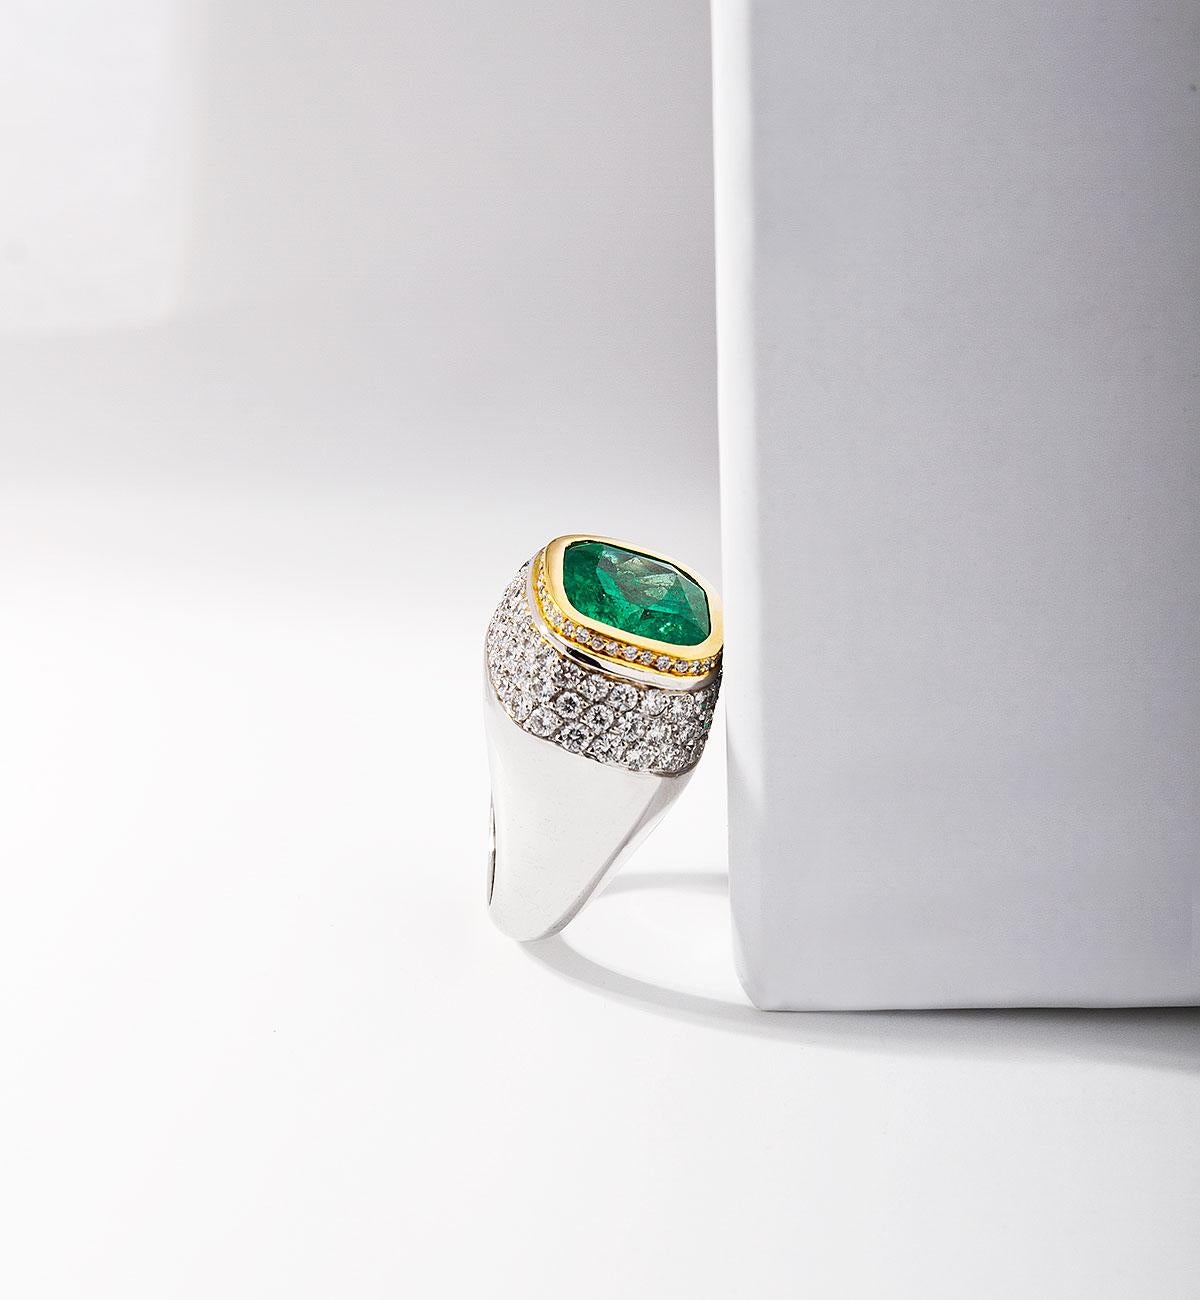 Women's or Men's 7.85 Carat Colombian Emerald Solitaire Art Deco Style Ring for Men 